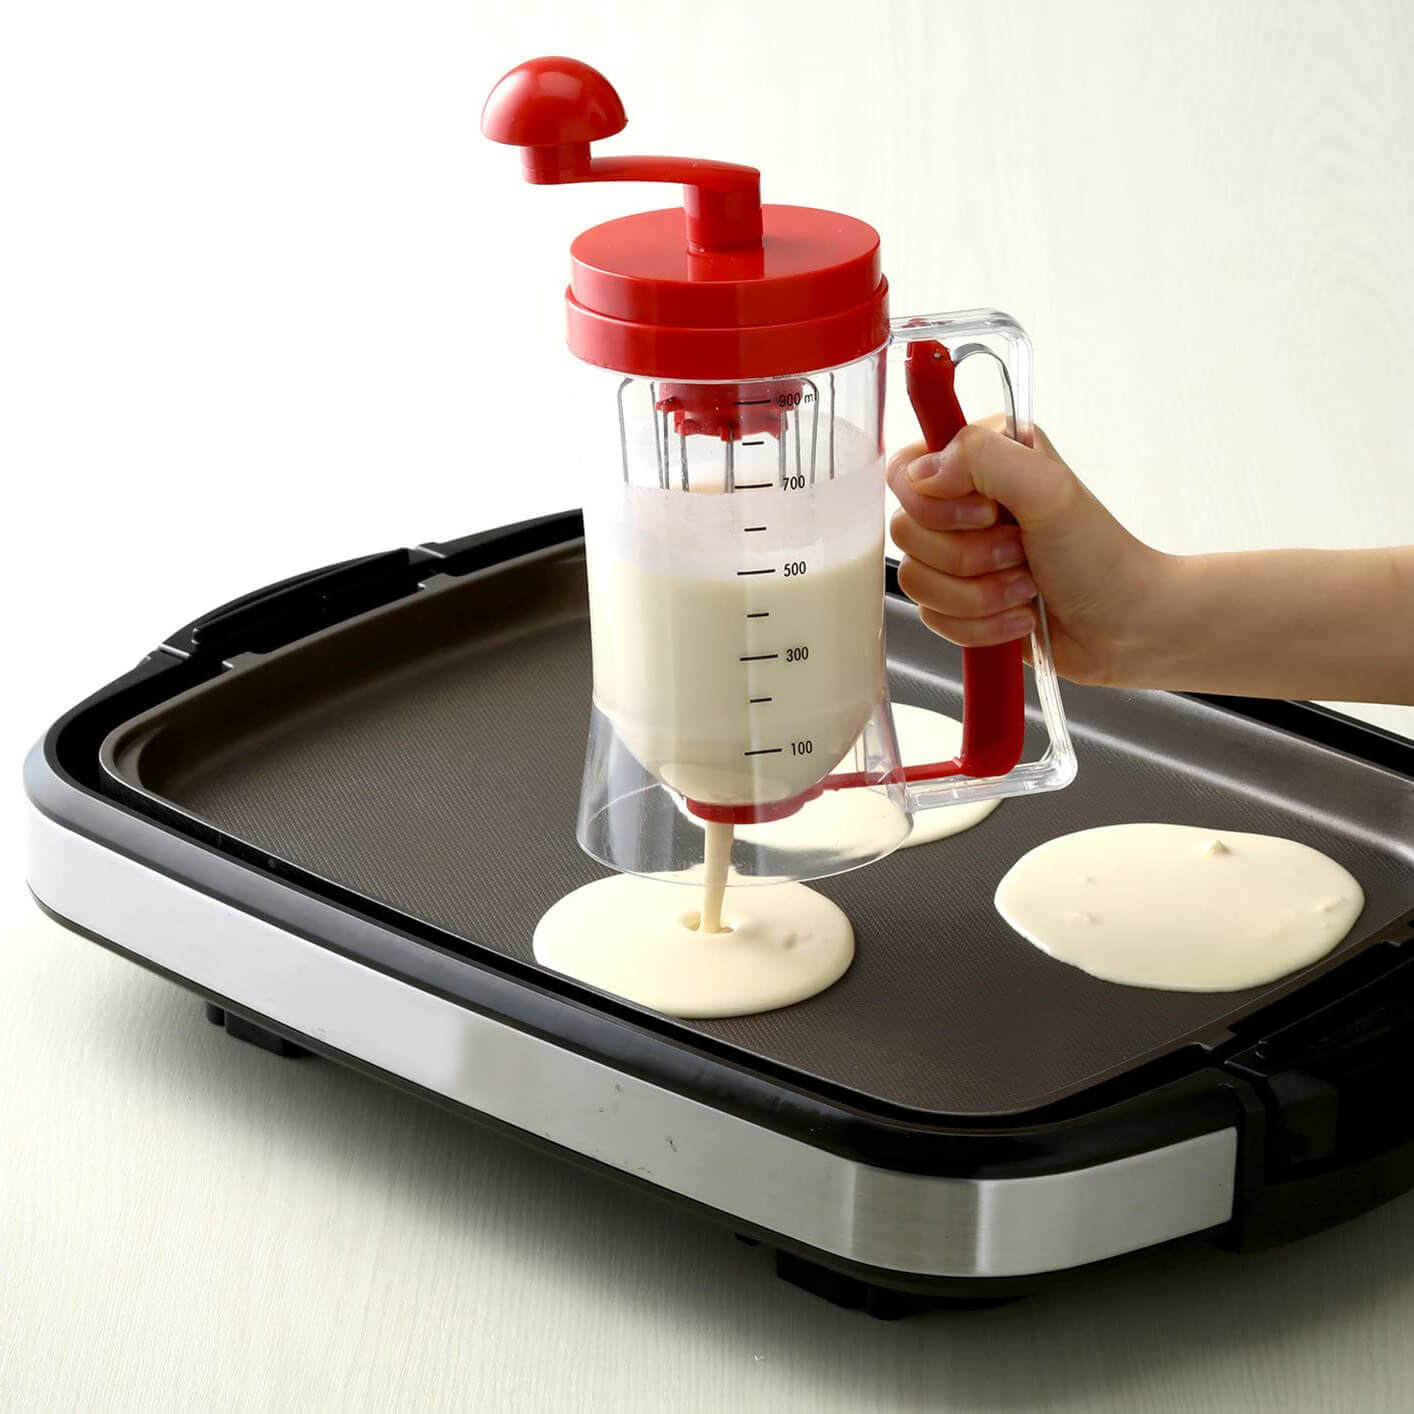 Pancake Machine